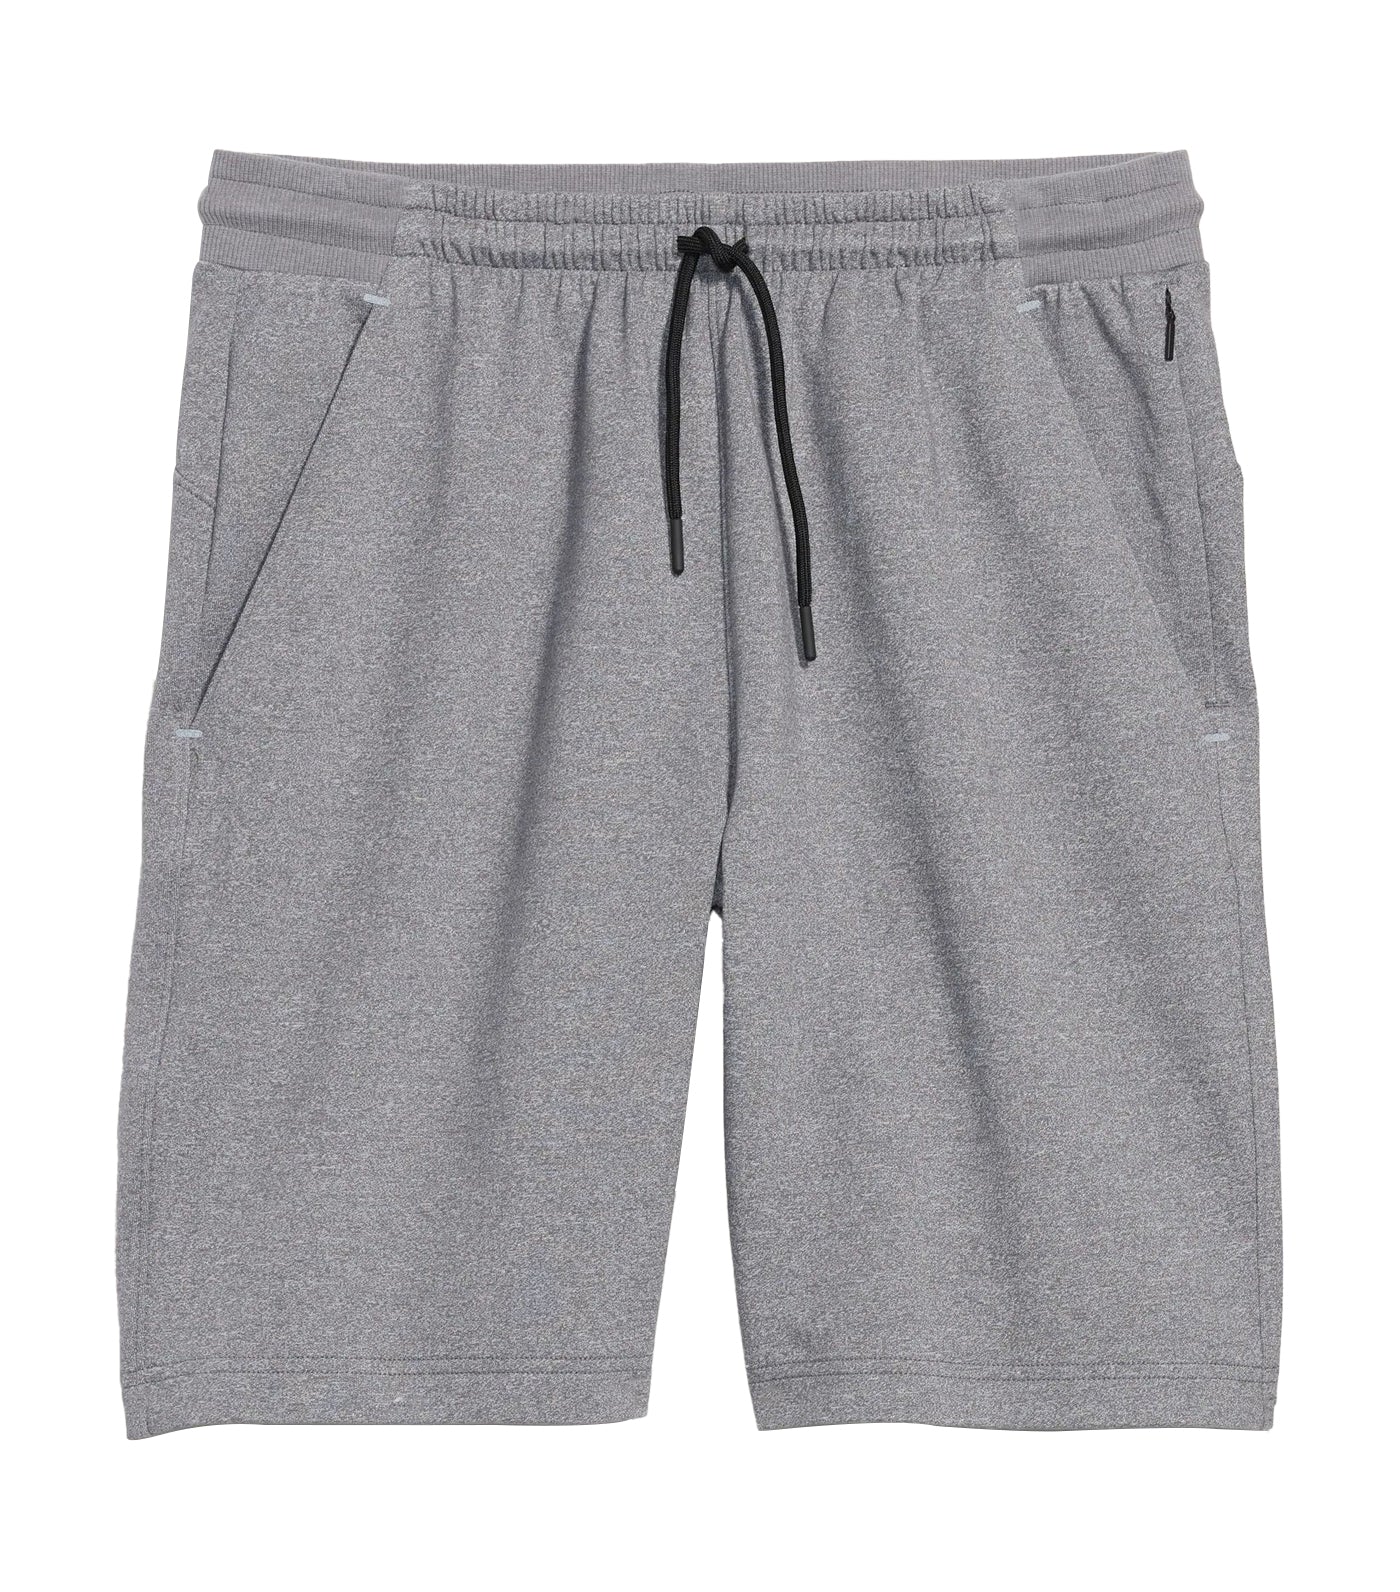 Dynamic Fleece Sweat Shorts for Men 9" Inseam Medium Gray